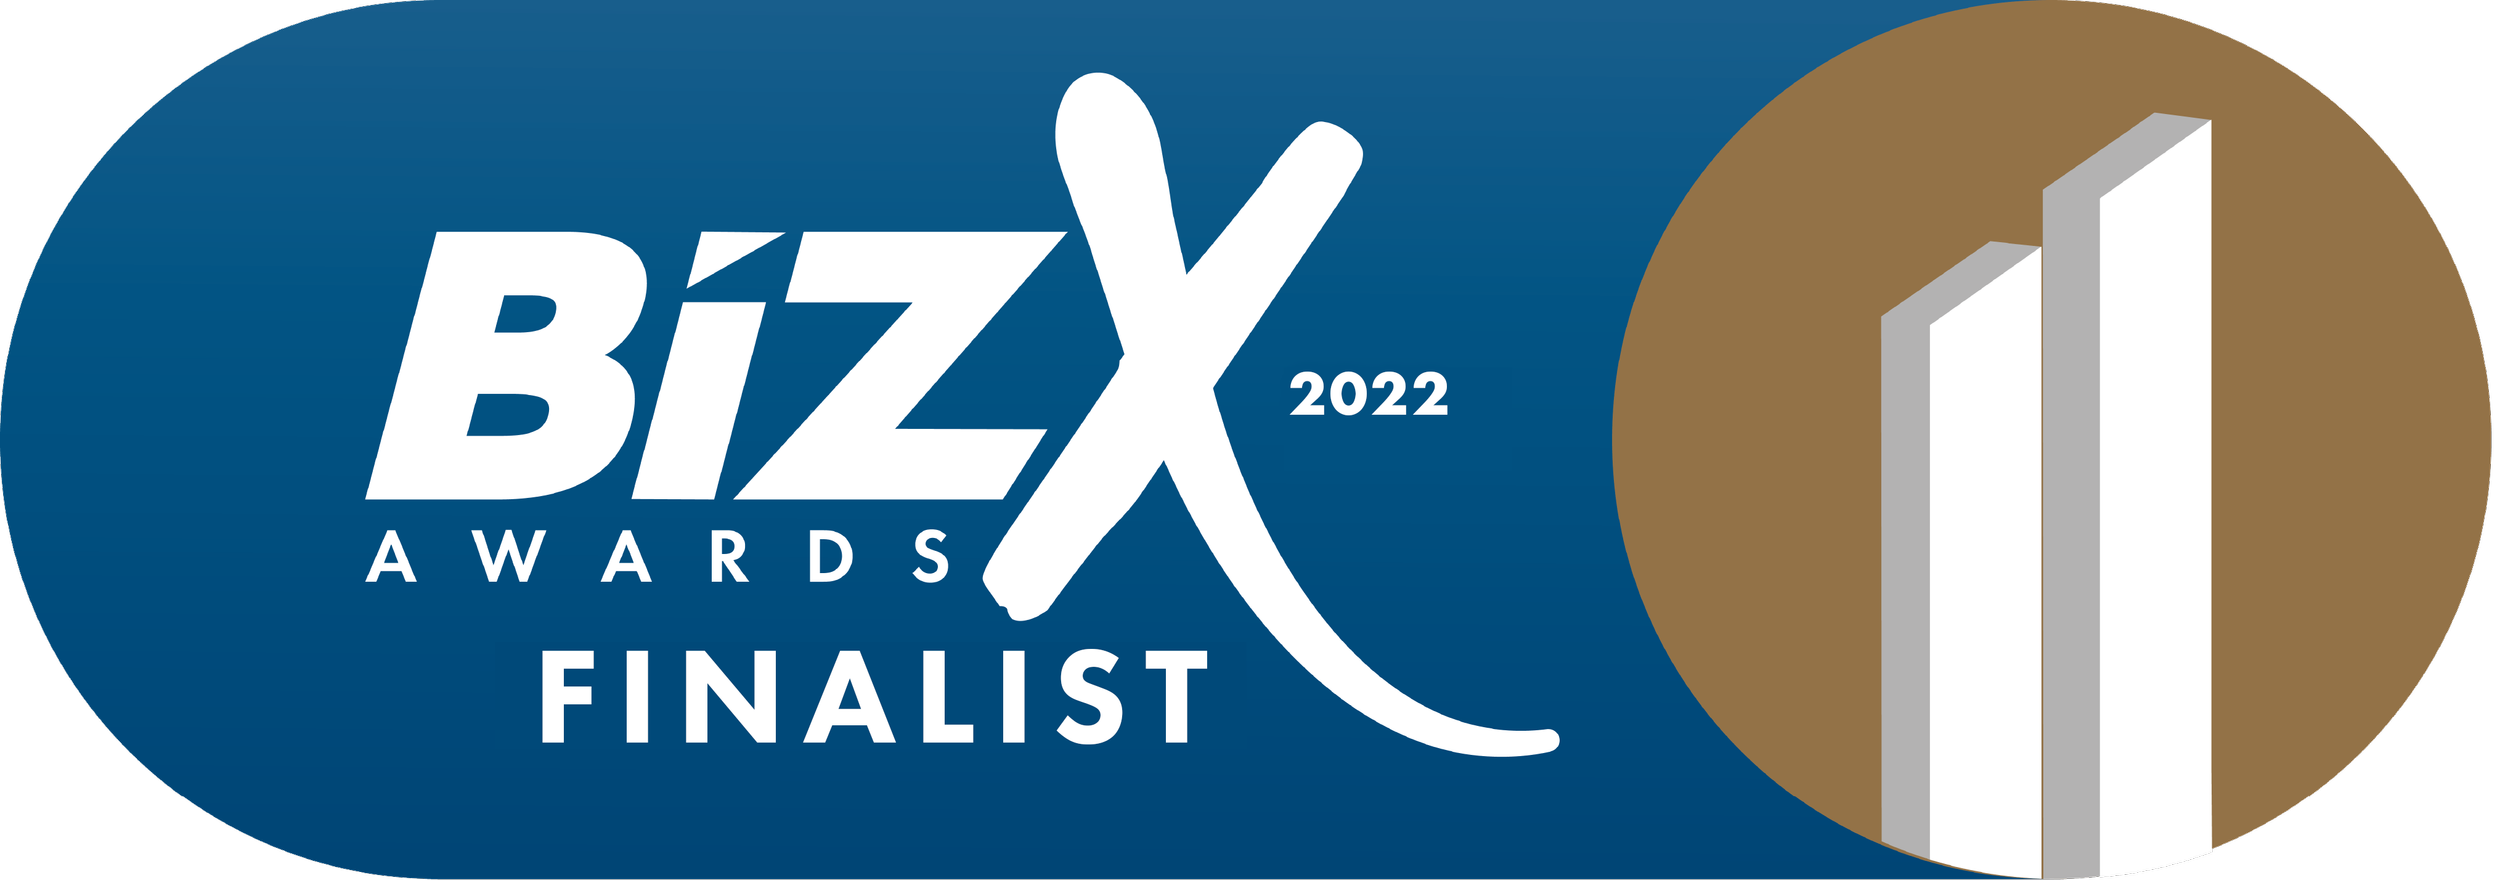 BizX Award Finalists Graphic 2022.png